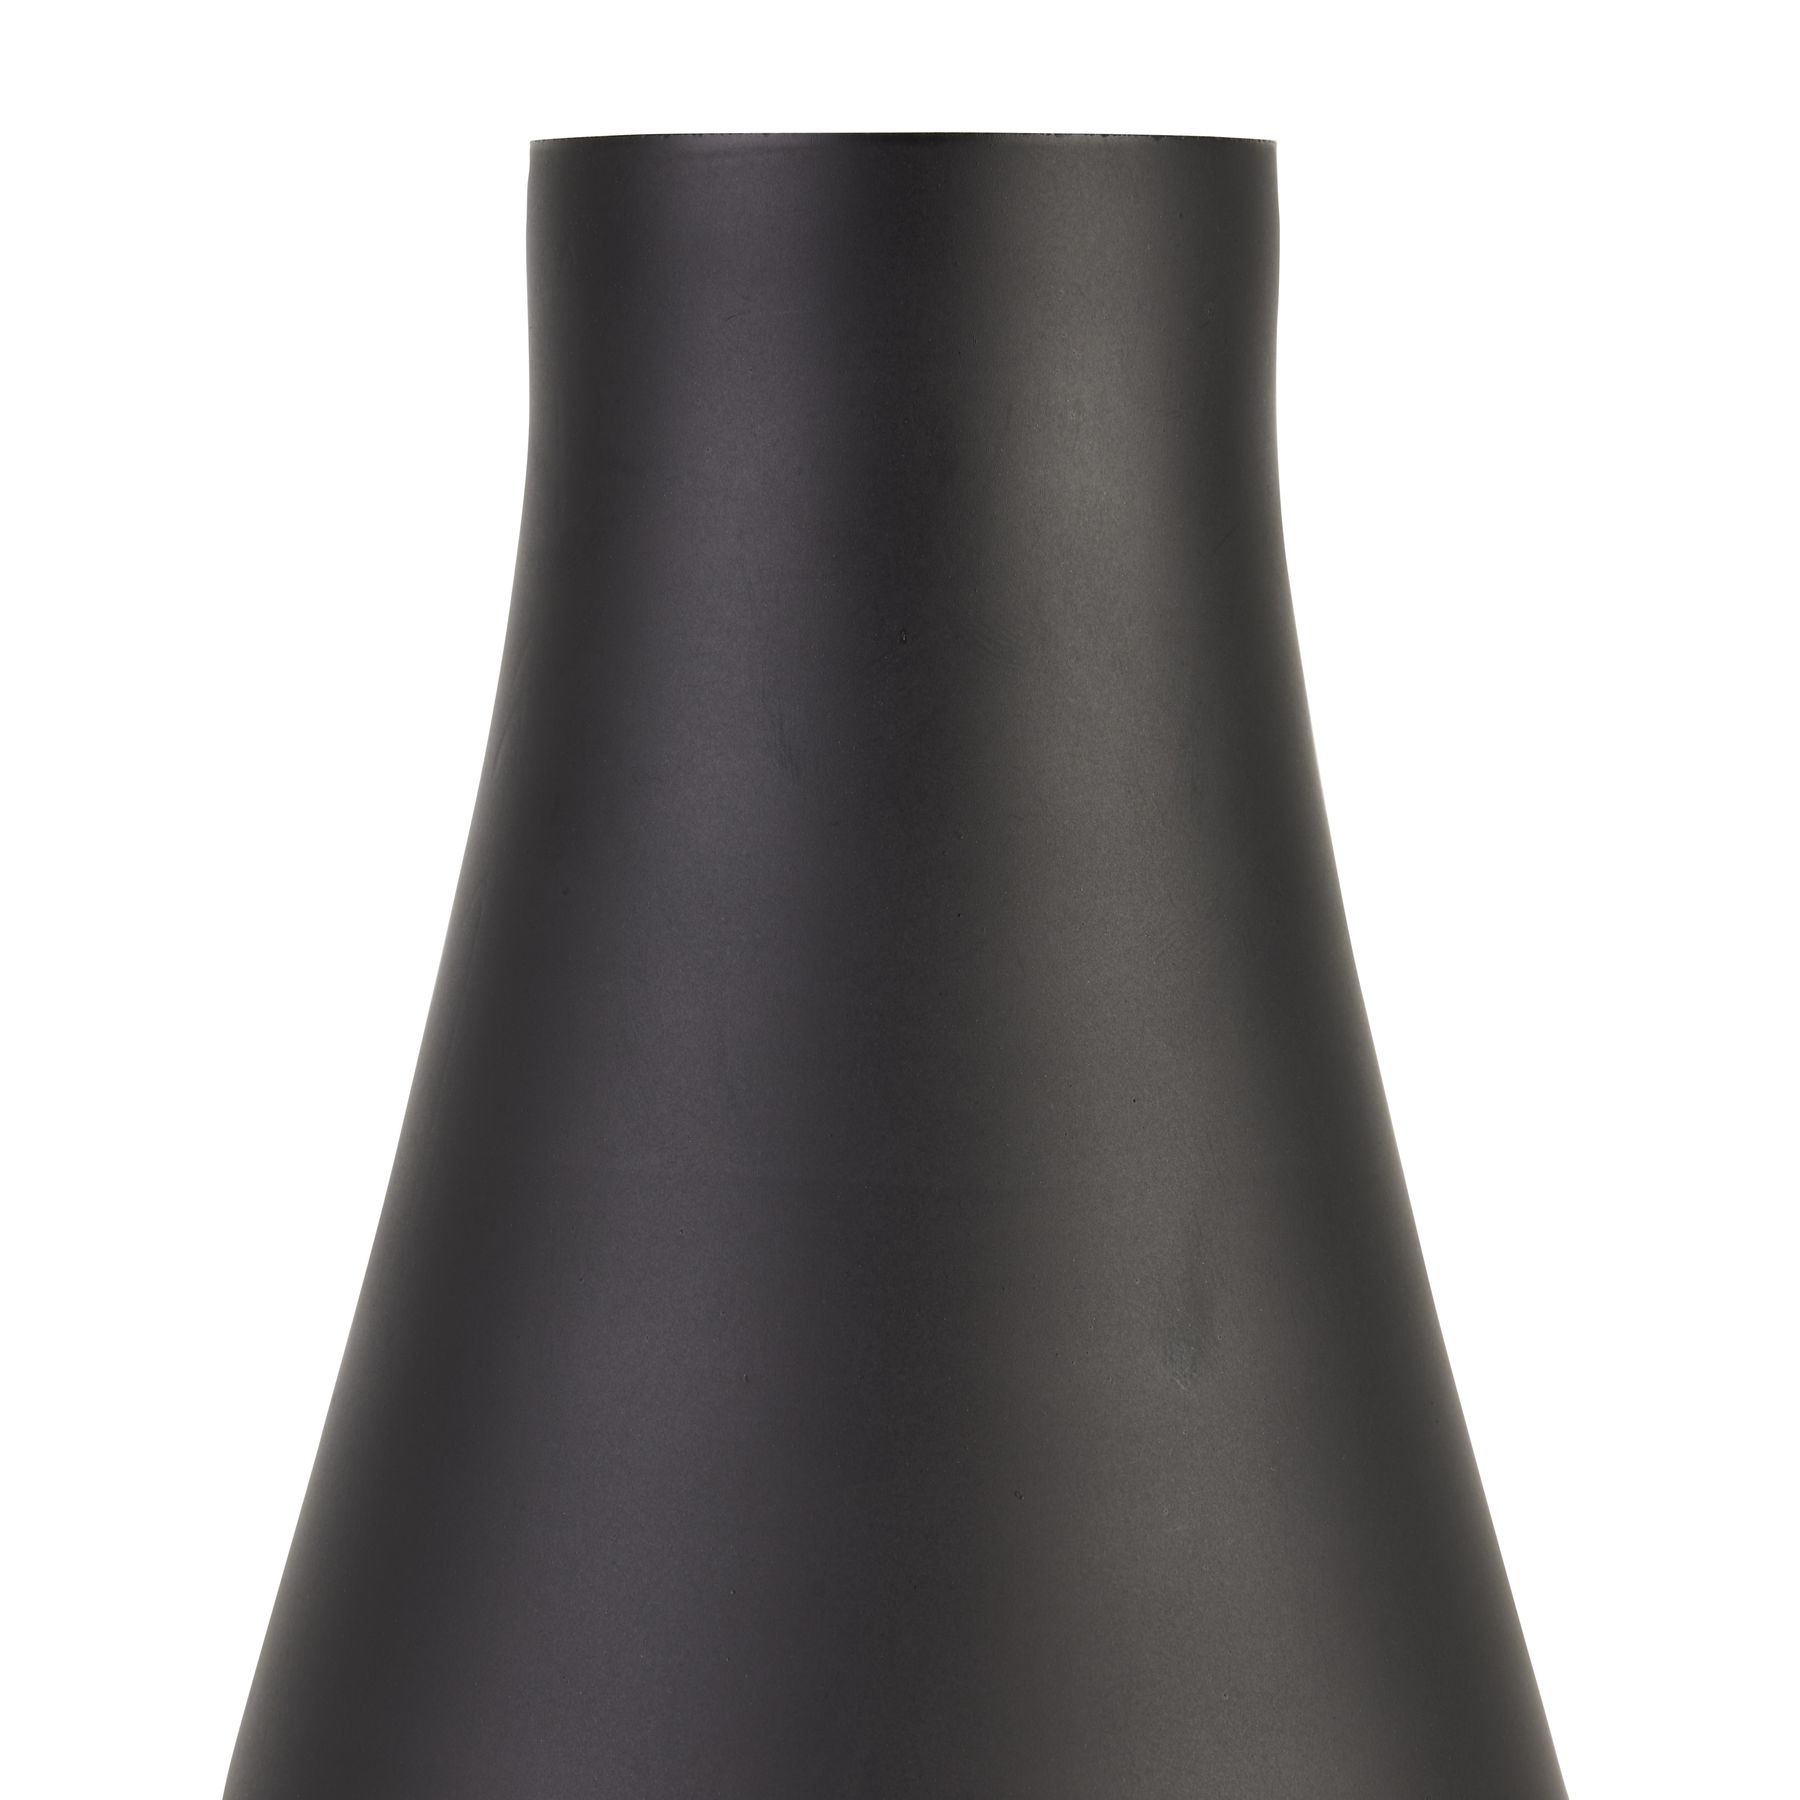 Black Tapered Tall Glass Vase - Image 2